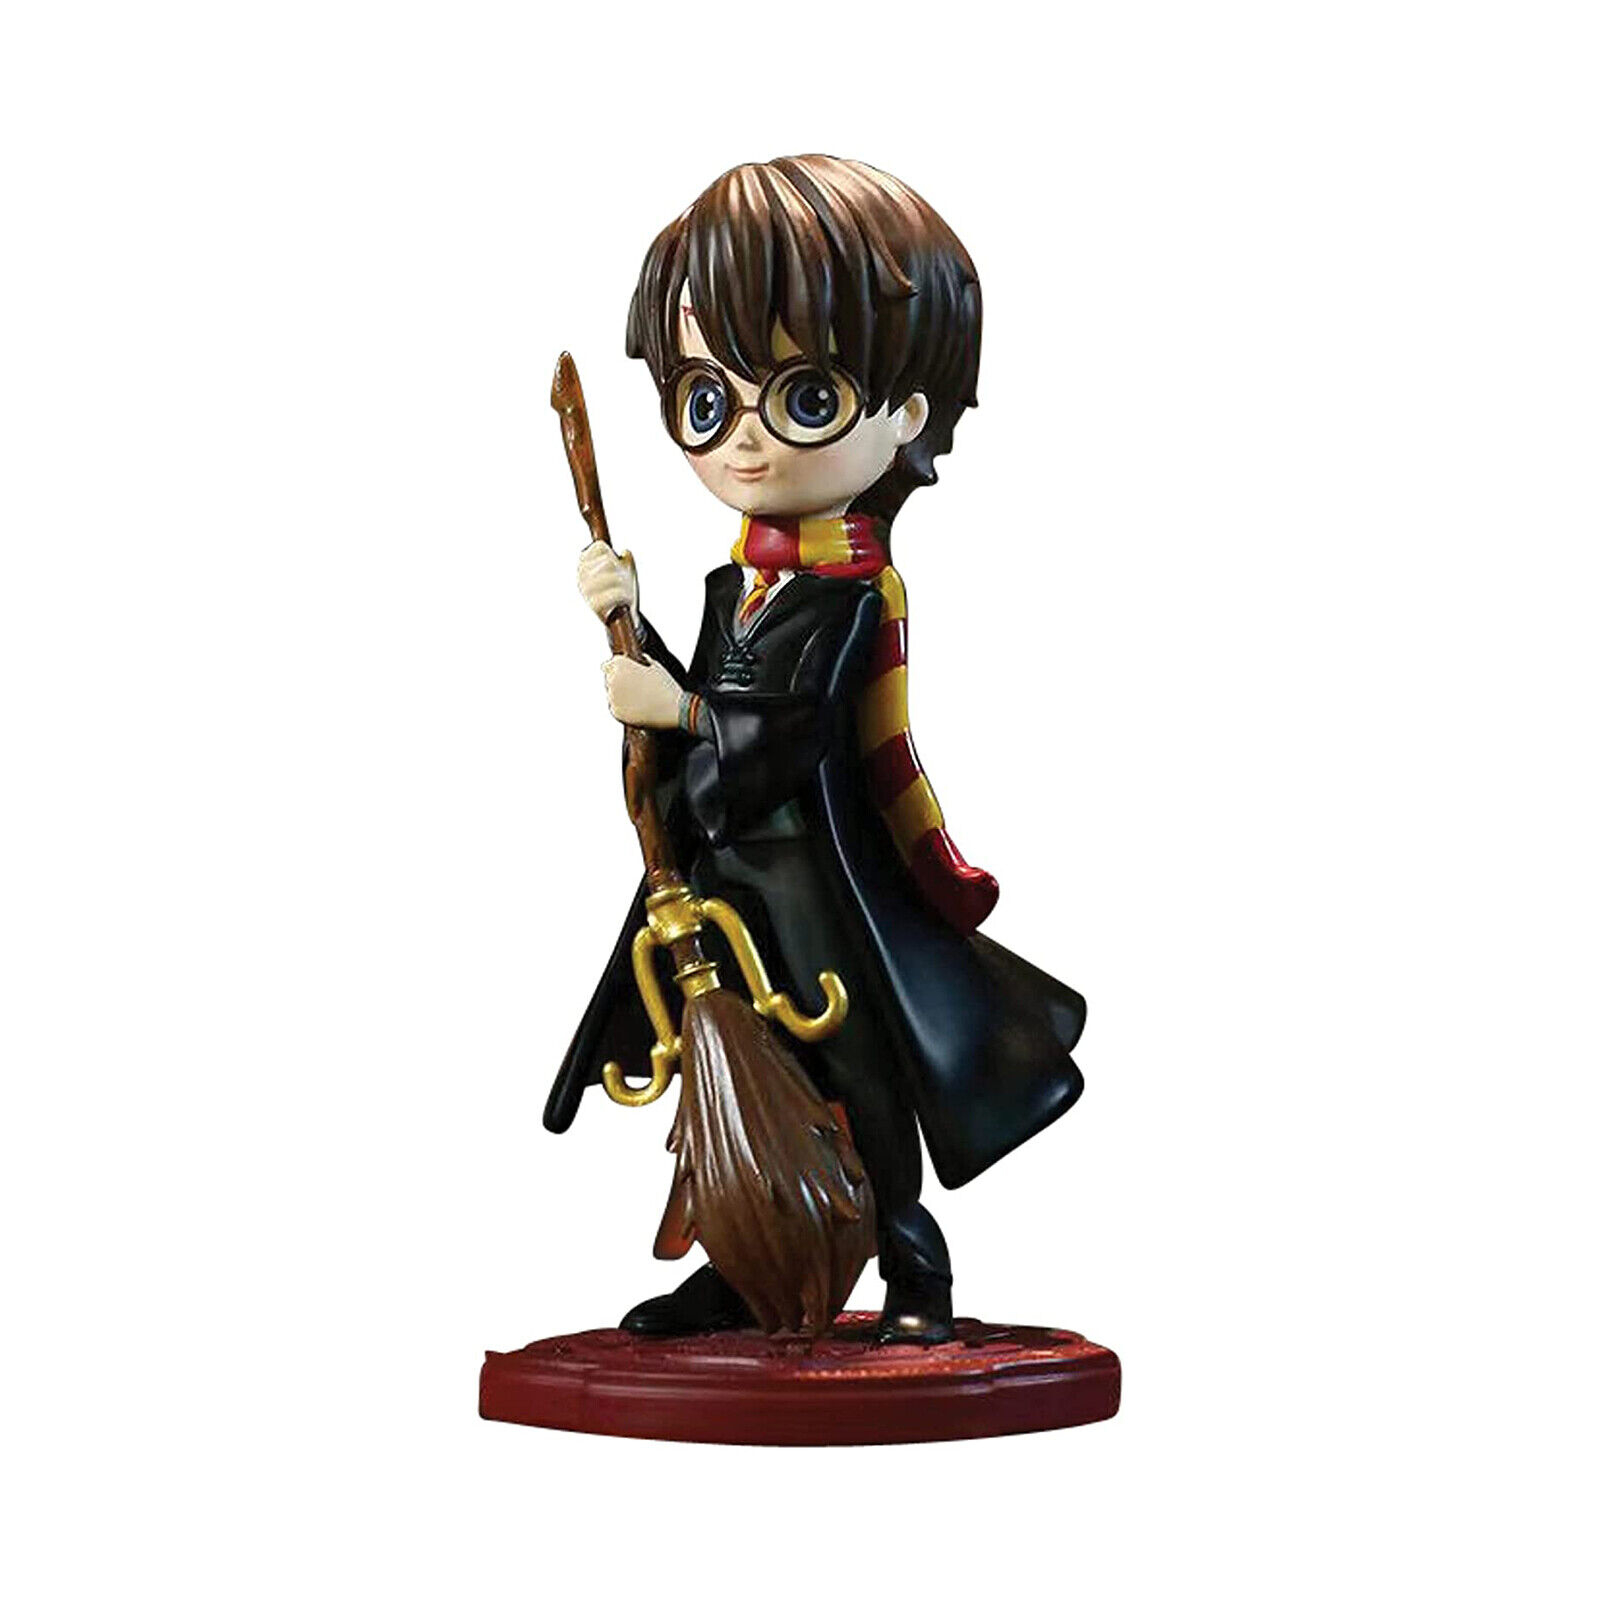 Enesco Wizarding World Harry Potter Figure NEW IN STOCK